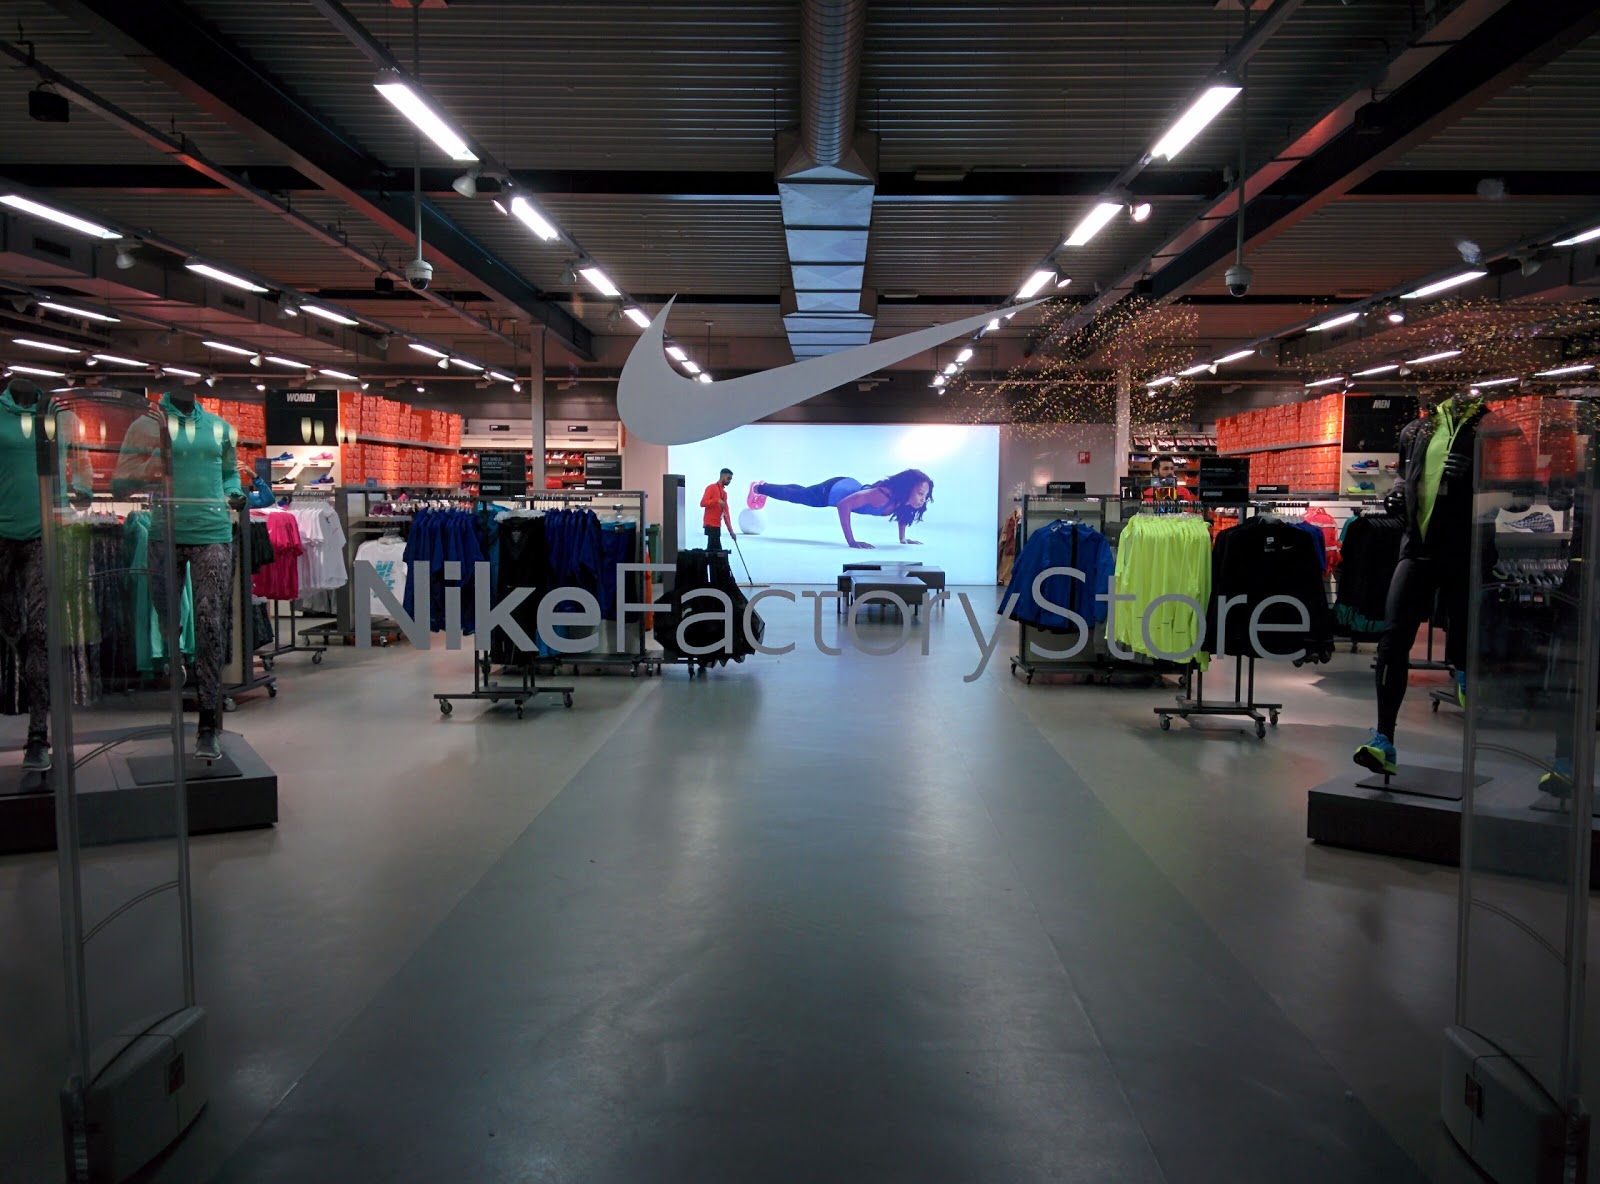 Economie duizelig picknick Nike Factory Store - WelkeCreditcard.nl